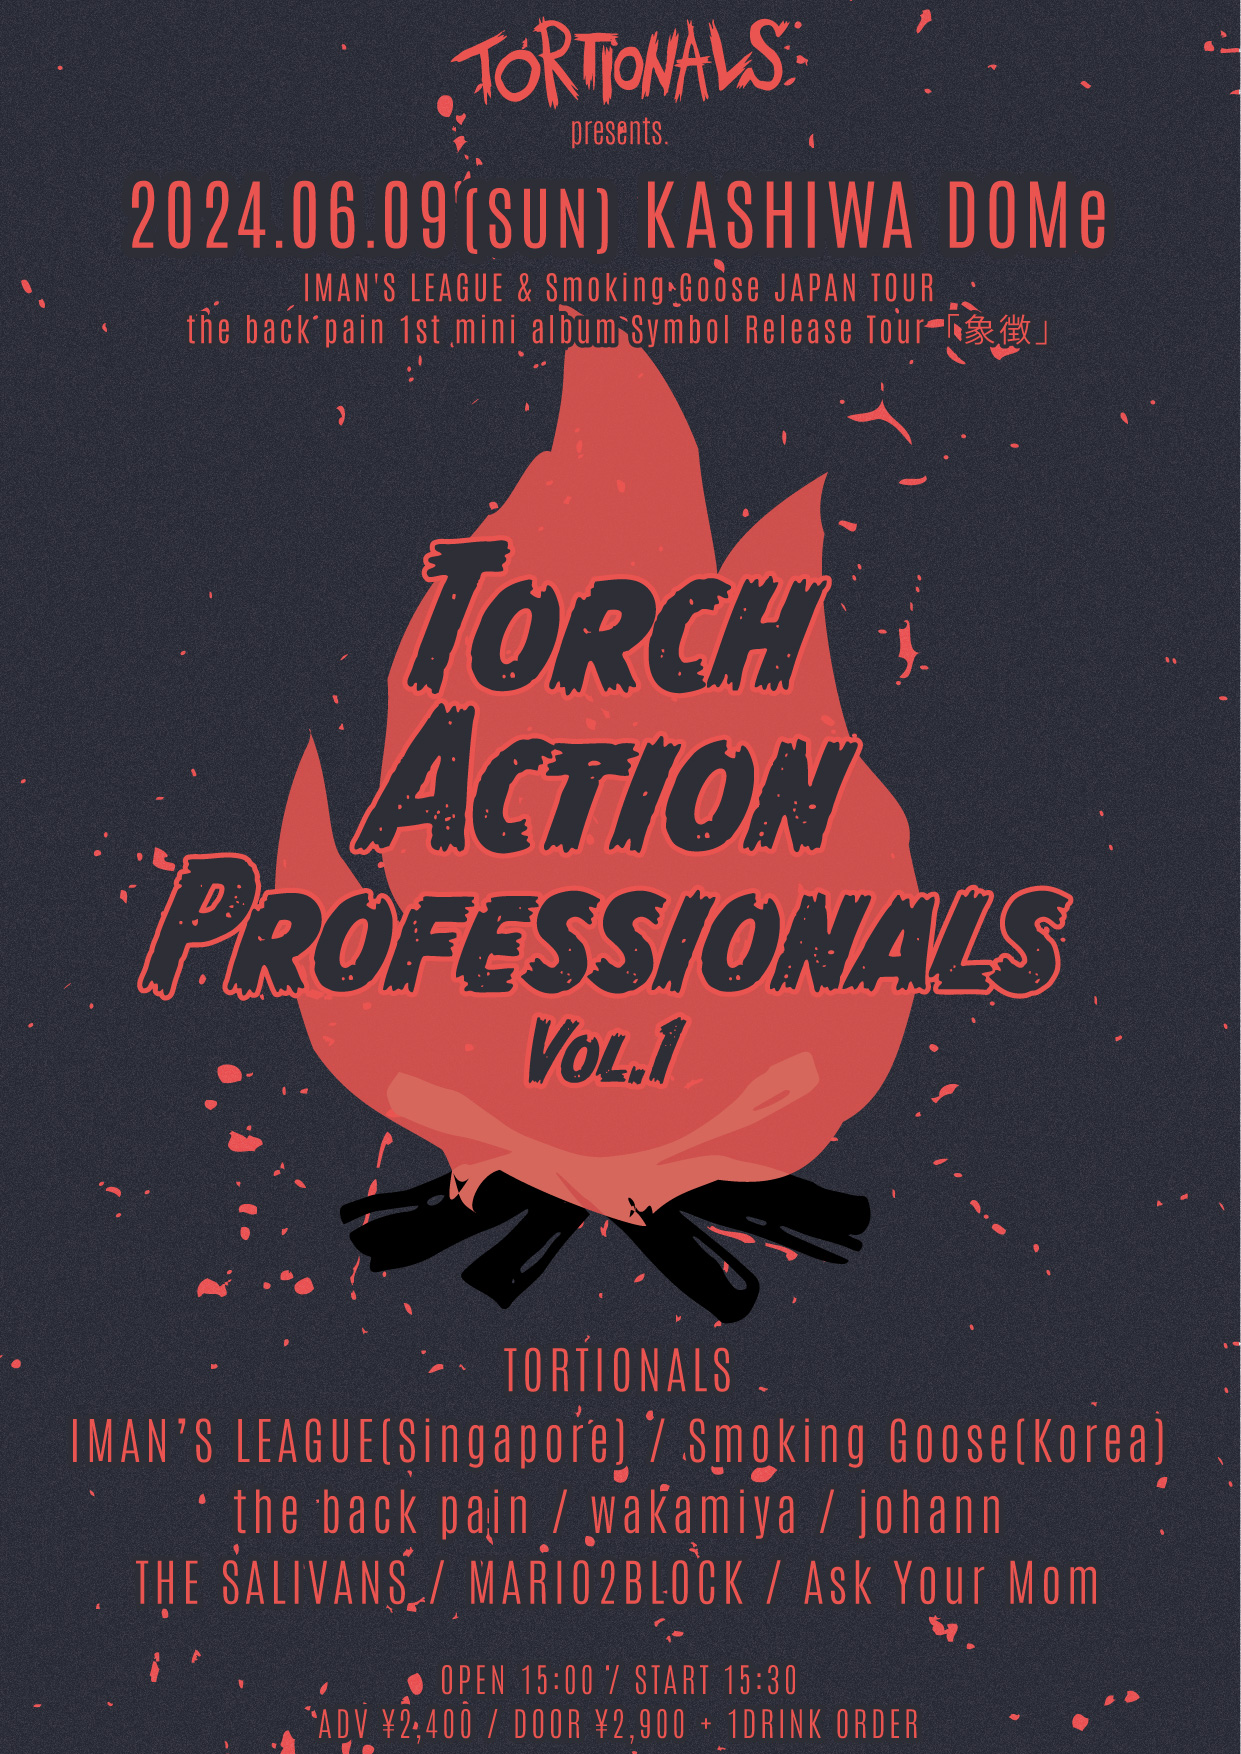 TORTIONALS pre.<br>“Torch Action Professionals Vol.1”